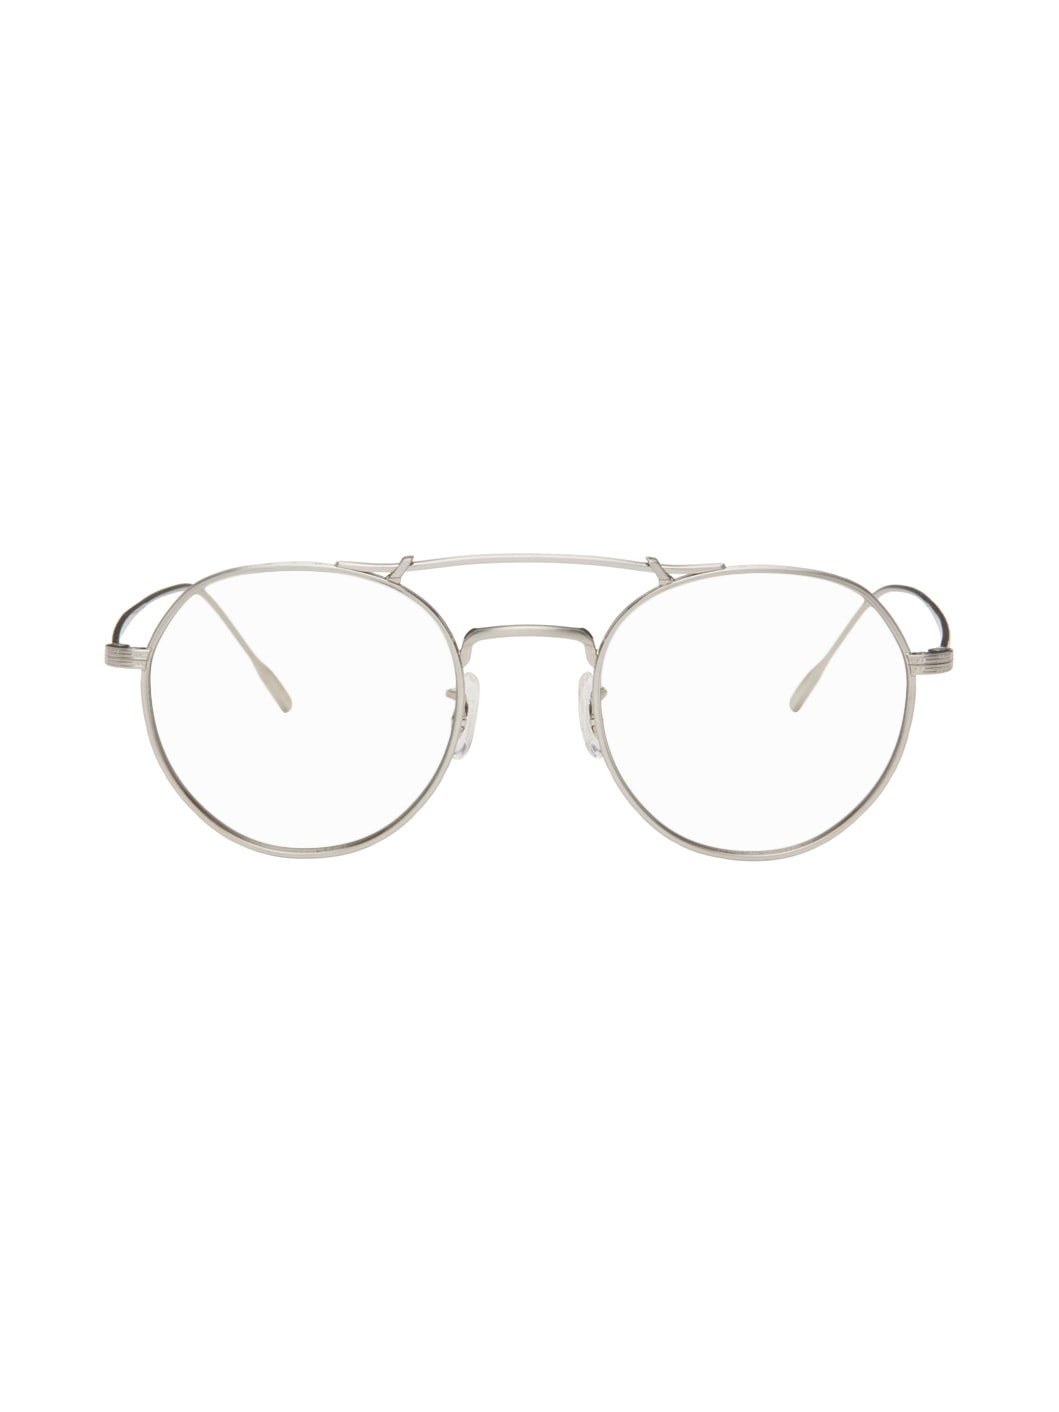 Silver Reymont Glasses - 1